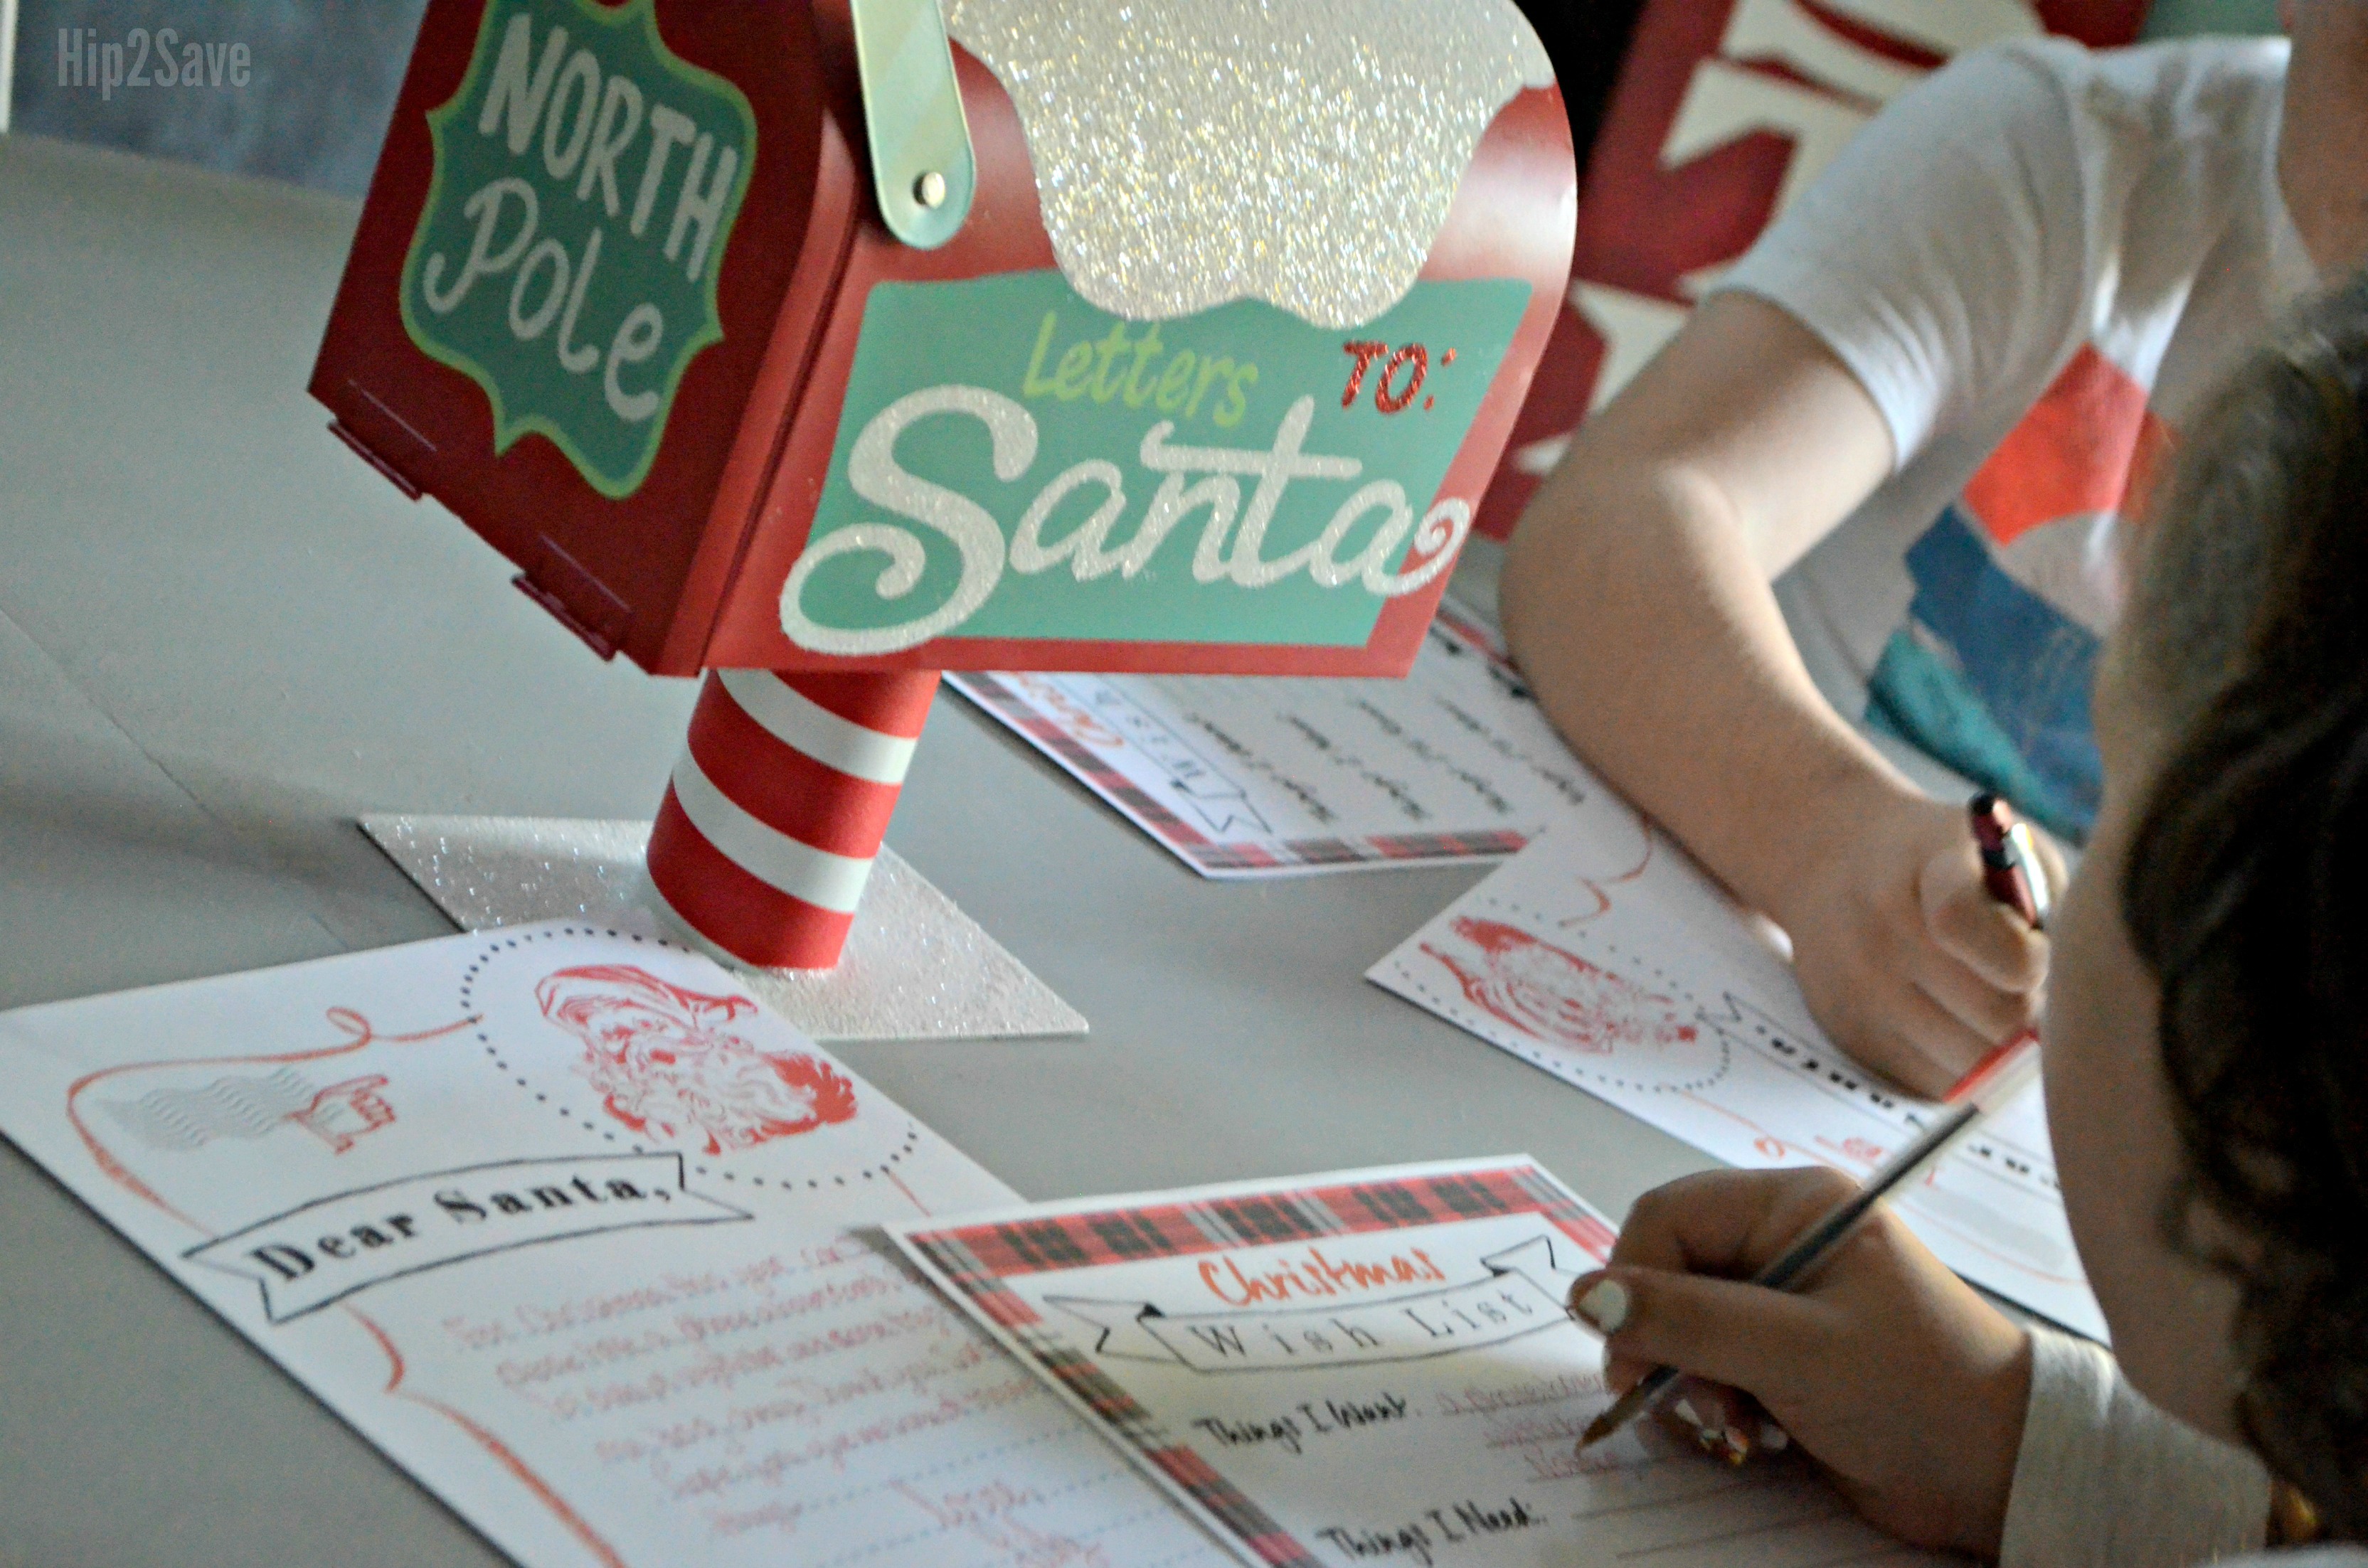 Letters to Santa Christmas Wish Giveaway 2020 - Altus ER 24/7, No